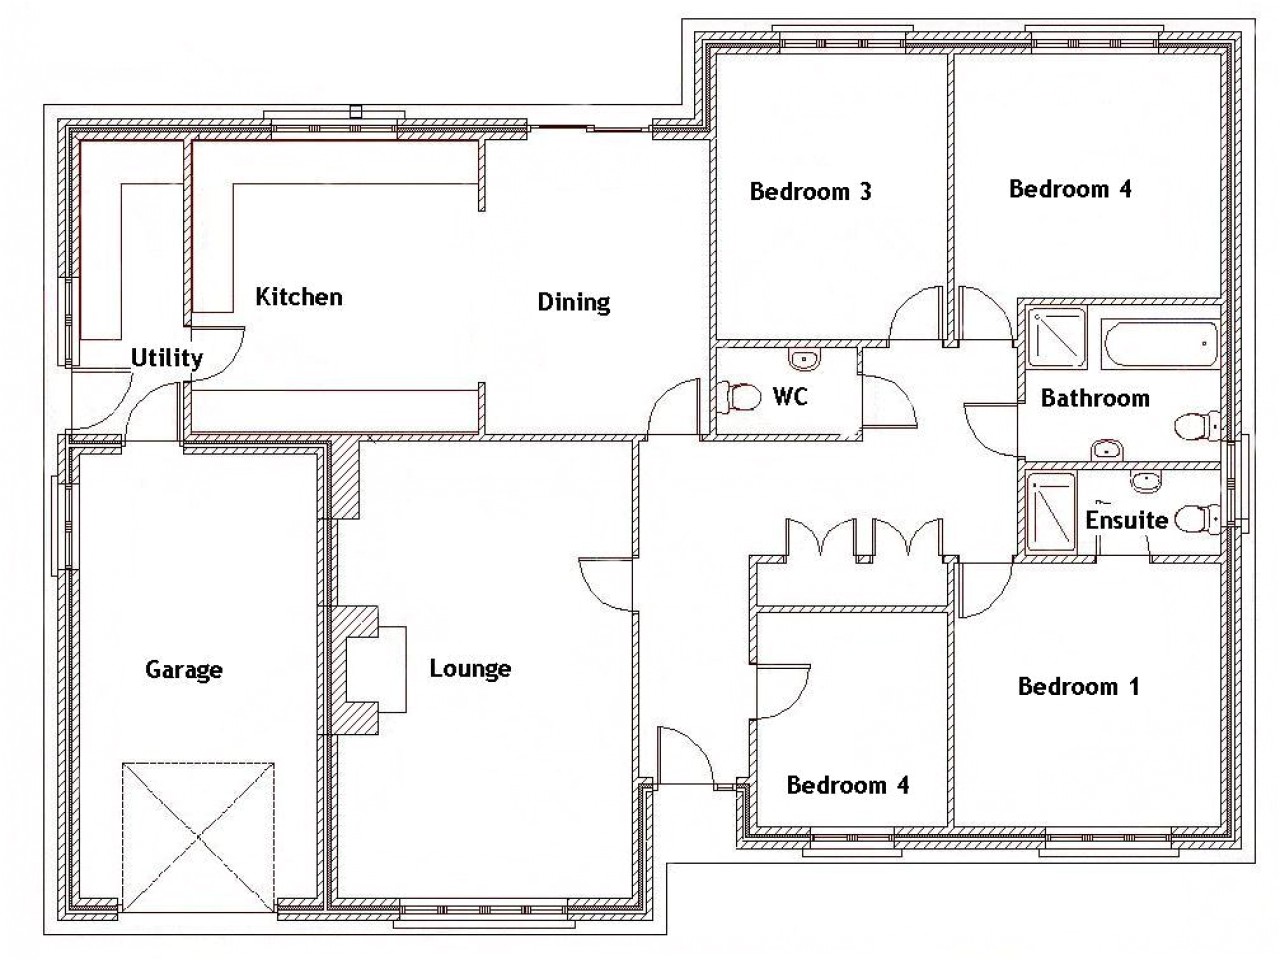 b271129b73c67feb 4 bedroom house with pool 4 bedroom house floor plans